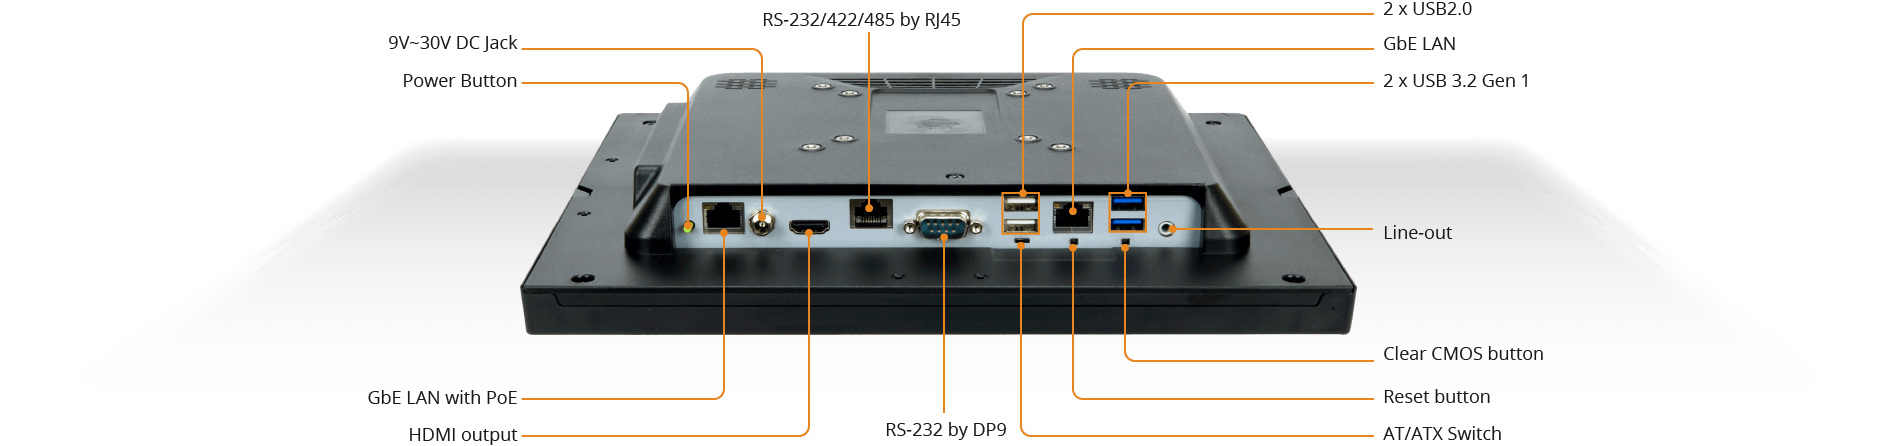 AFL3-12A-AL industrial panel pc Integrated integrated I/O